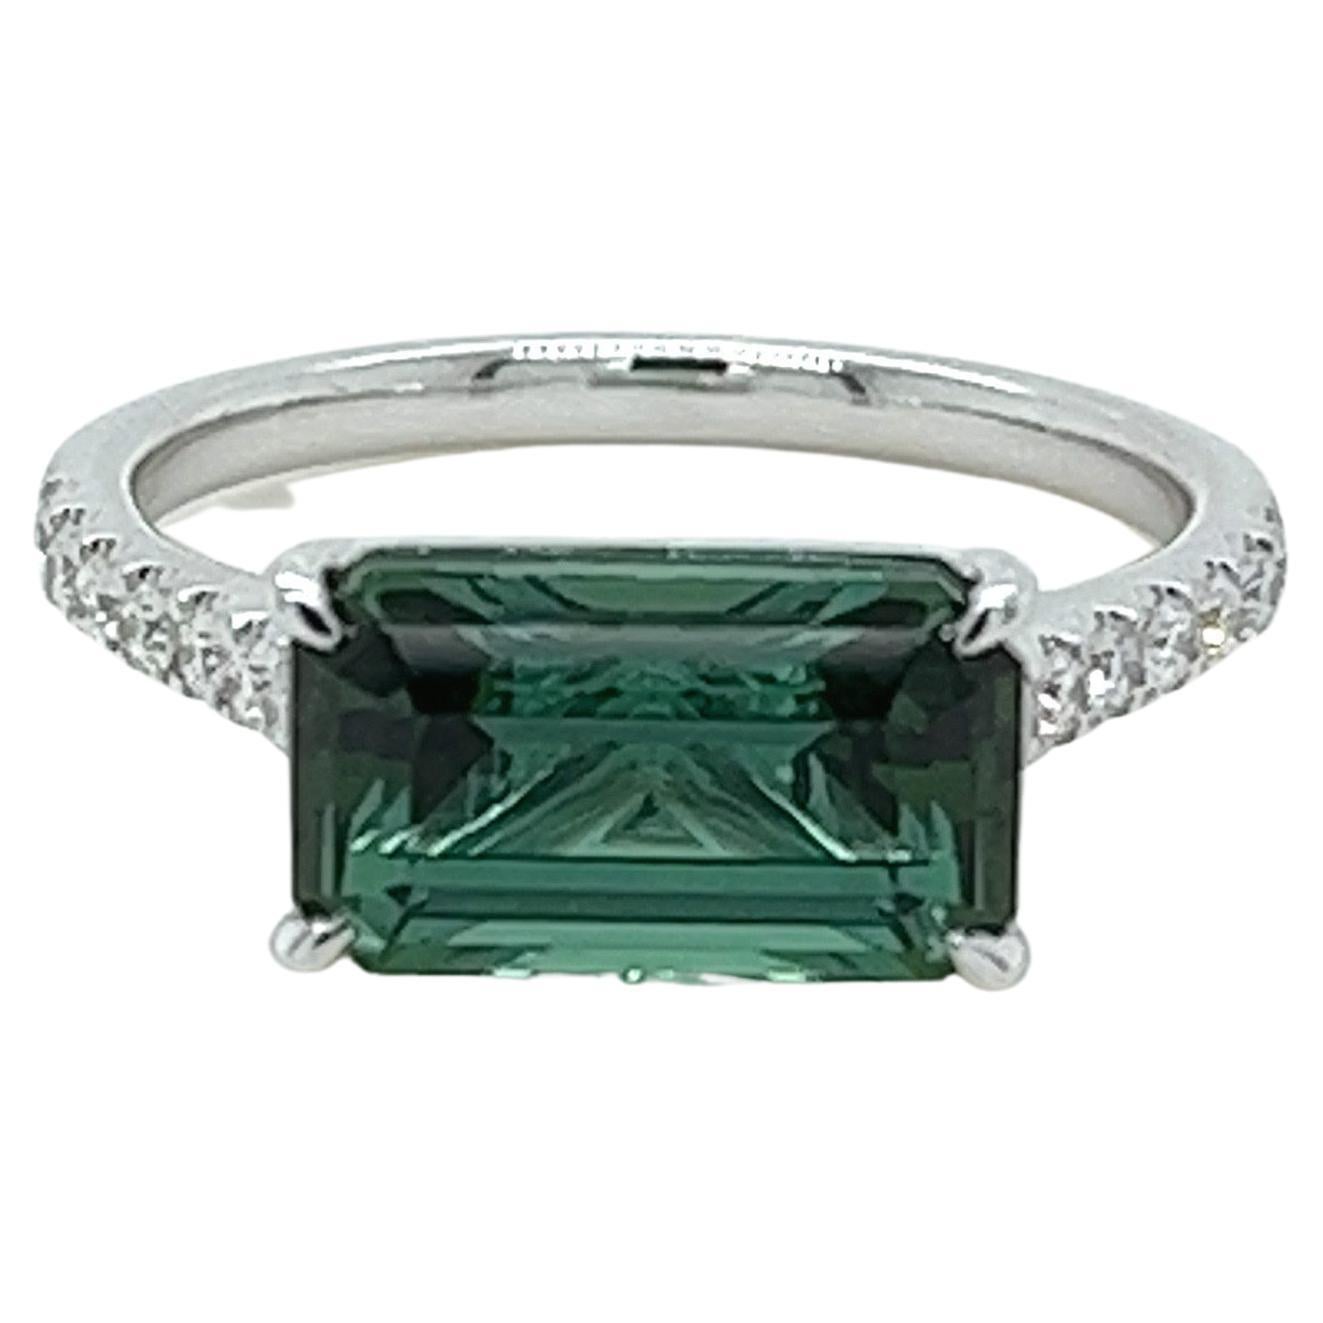 3.68 Carat Emerald Cut Green Tourmaline & Diamond Ring in 18 Karat White Gold